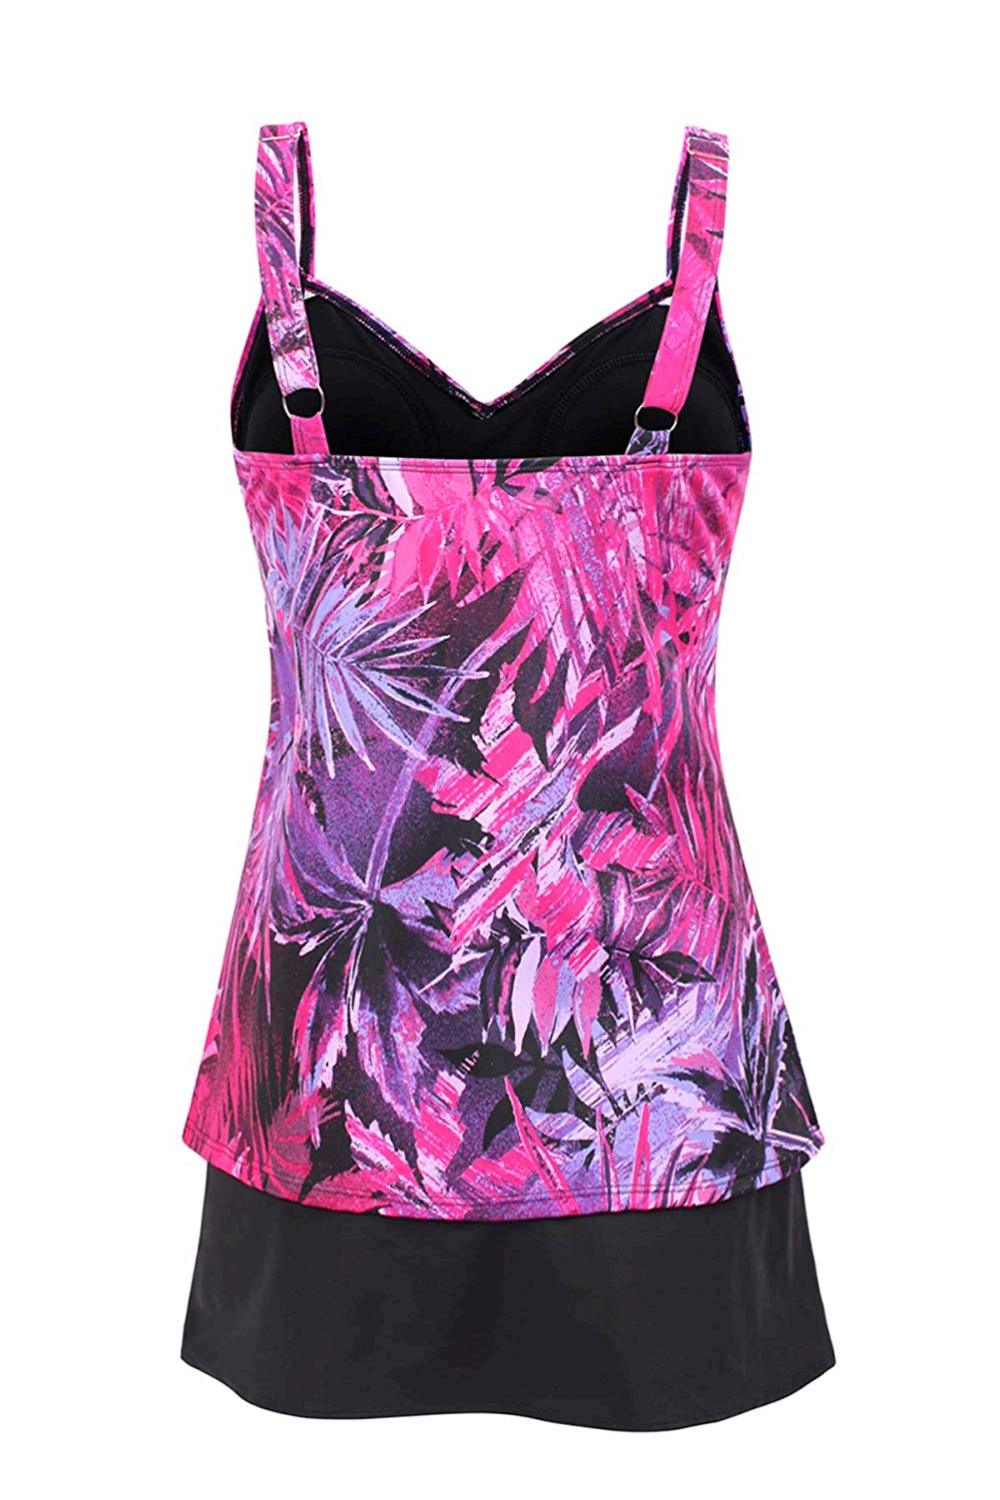 JINXUEER Women's Plus Size Swimwear Floral Tankini Set, Purpleleaf ...